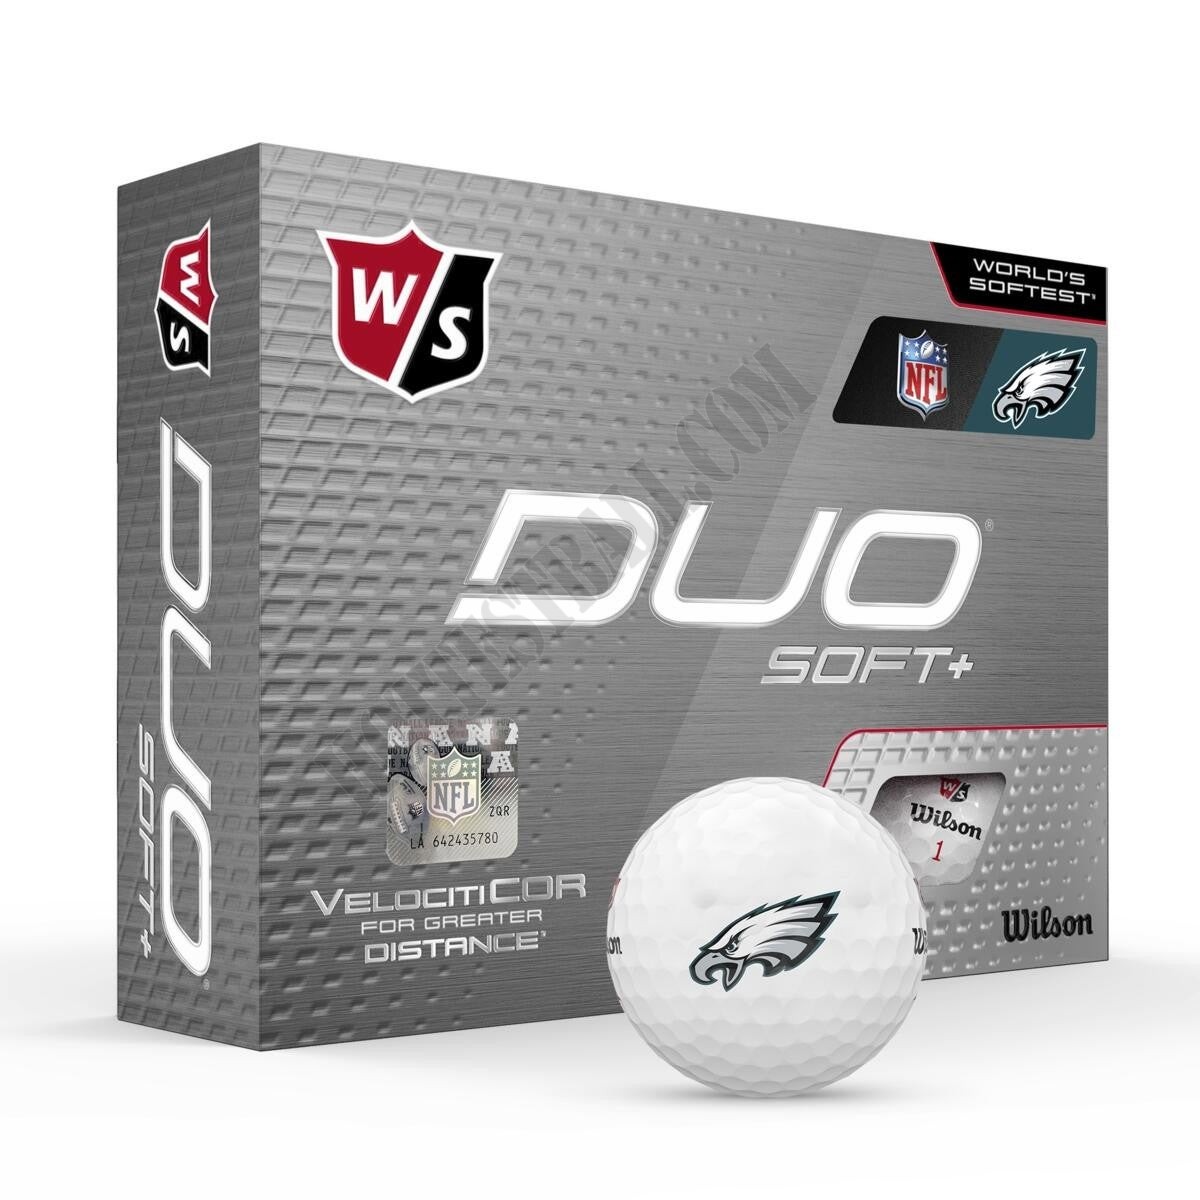 Duo Soft+ NFL Golf Balls - Philadelphia Eagles ● Wilson Promotions - Duo Soft+ NFL Golf Balls - Philadelphia Eagles ● Wilson Promotions